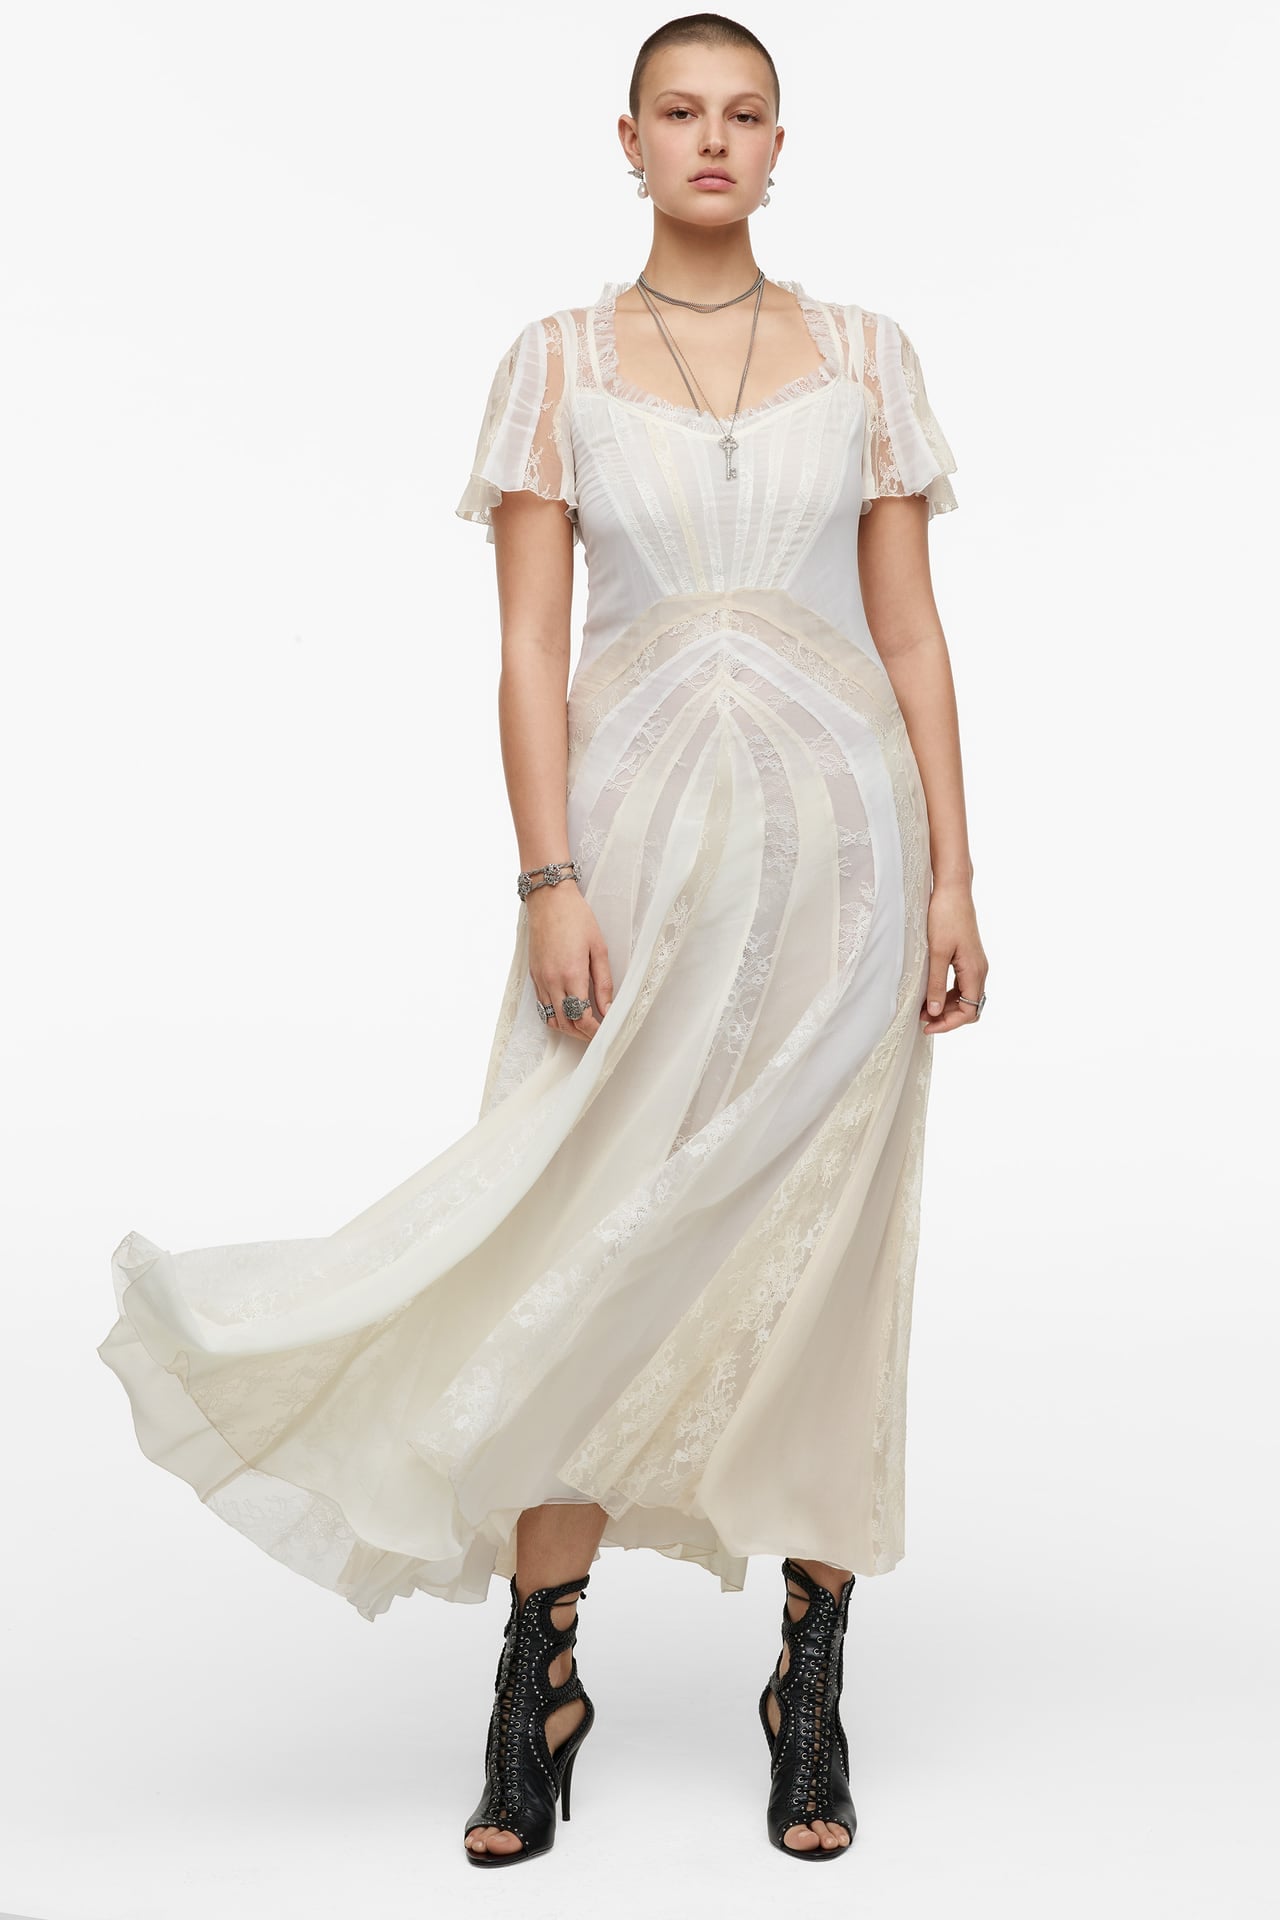 A White Dress: Zara Long Lace Dress Limited Edition